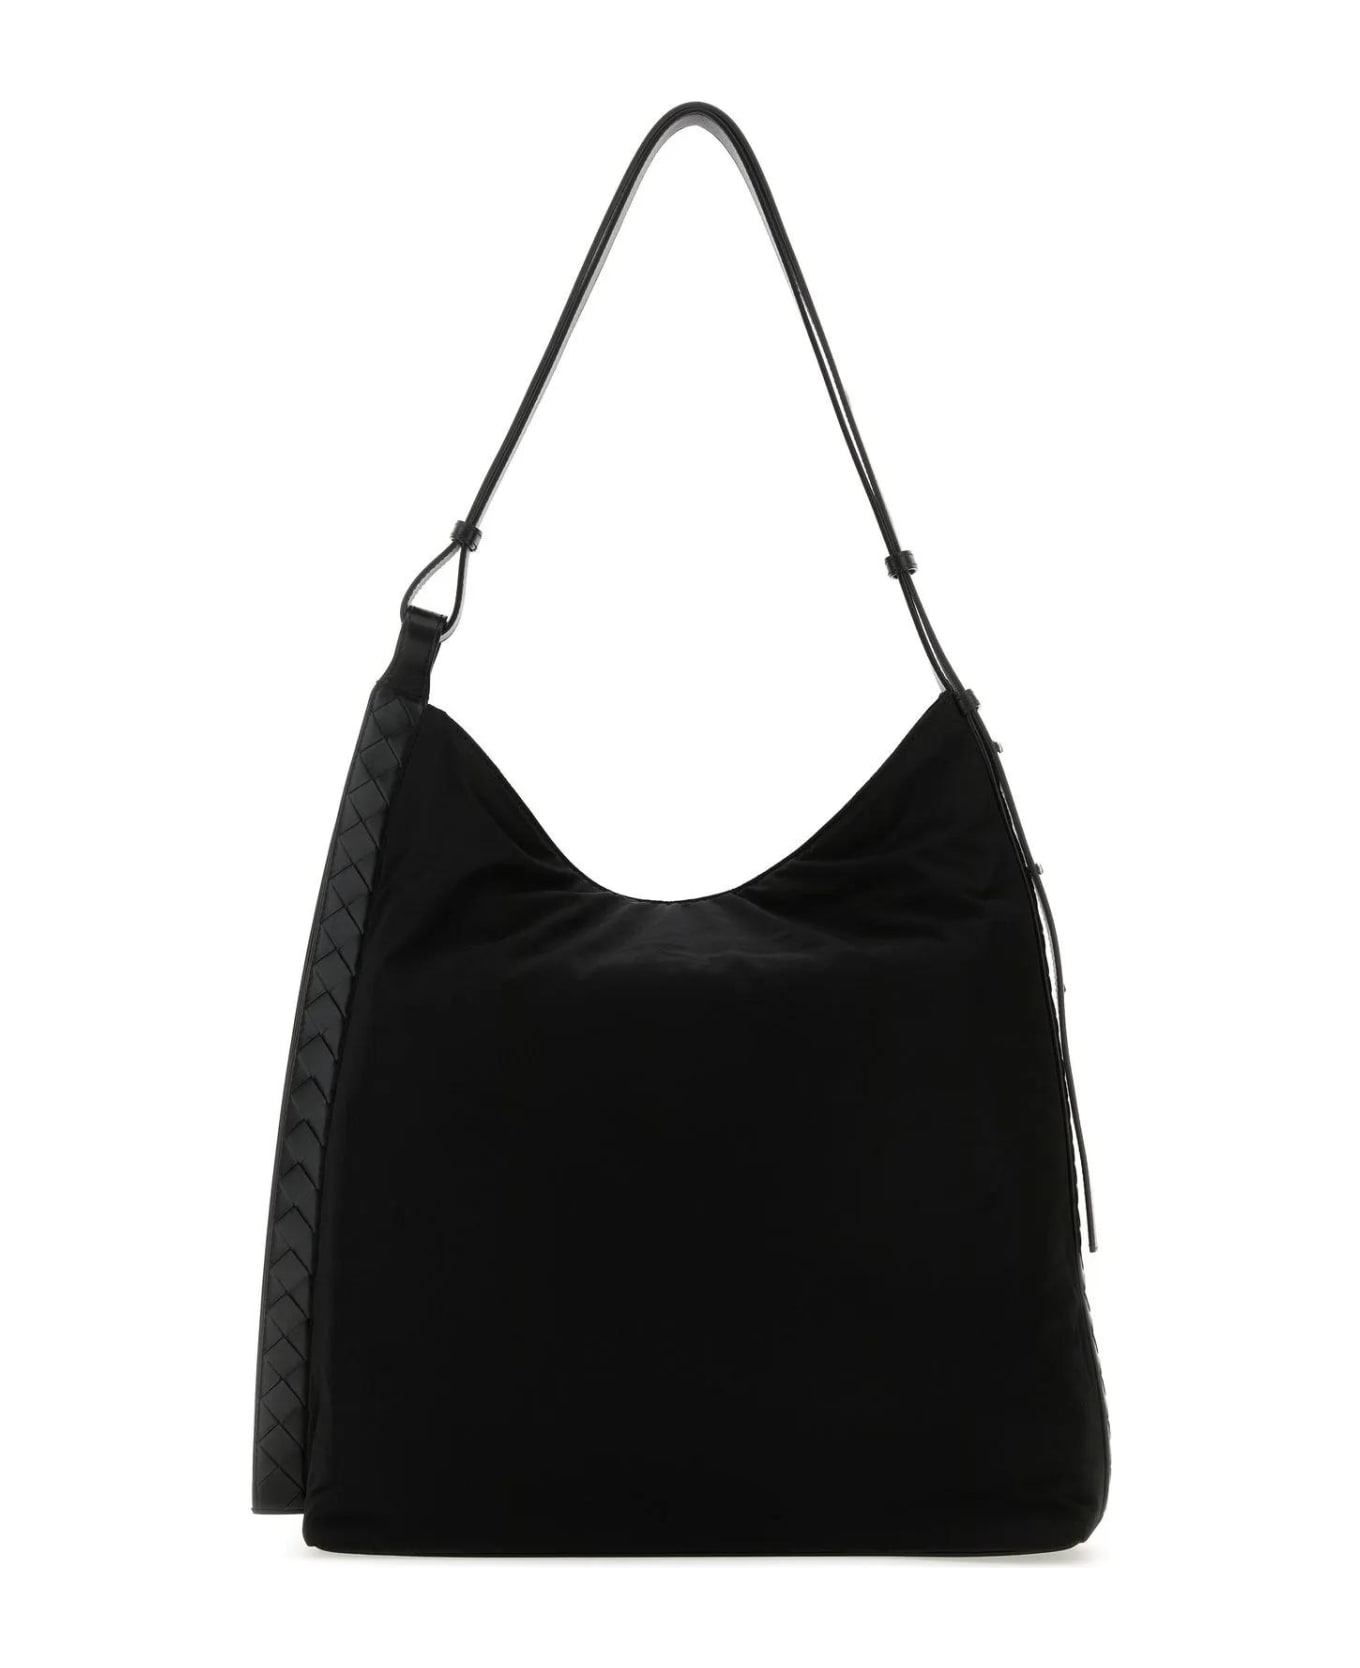 Bottega Veneta Black Fabric Shoulder Bag - Black/silver